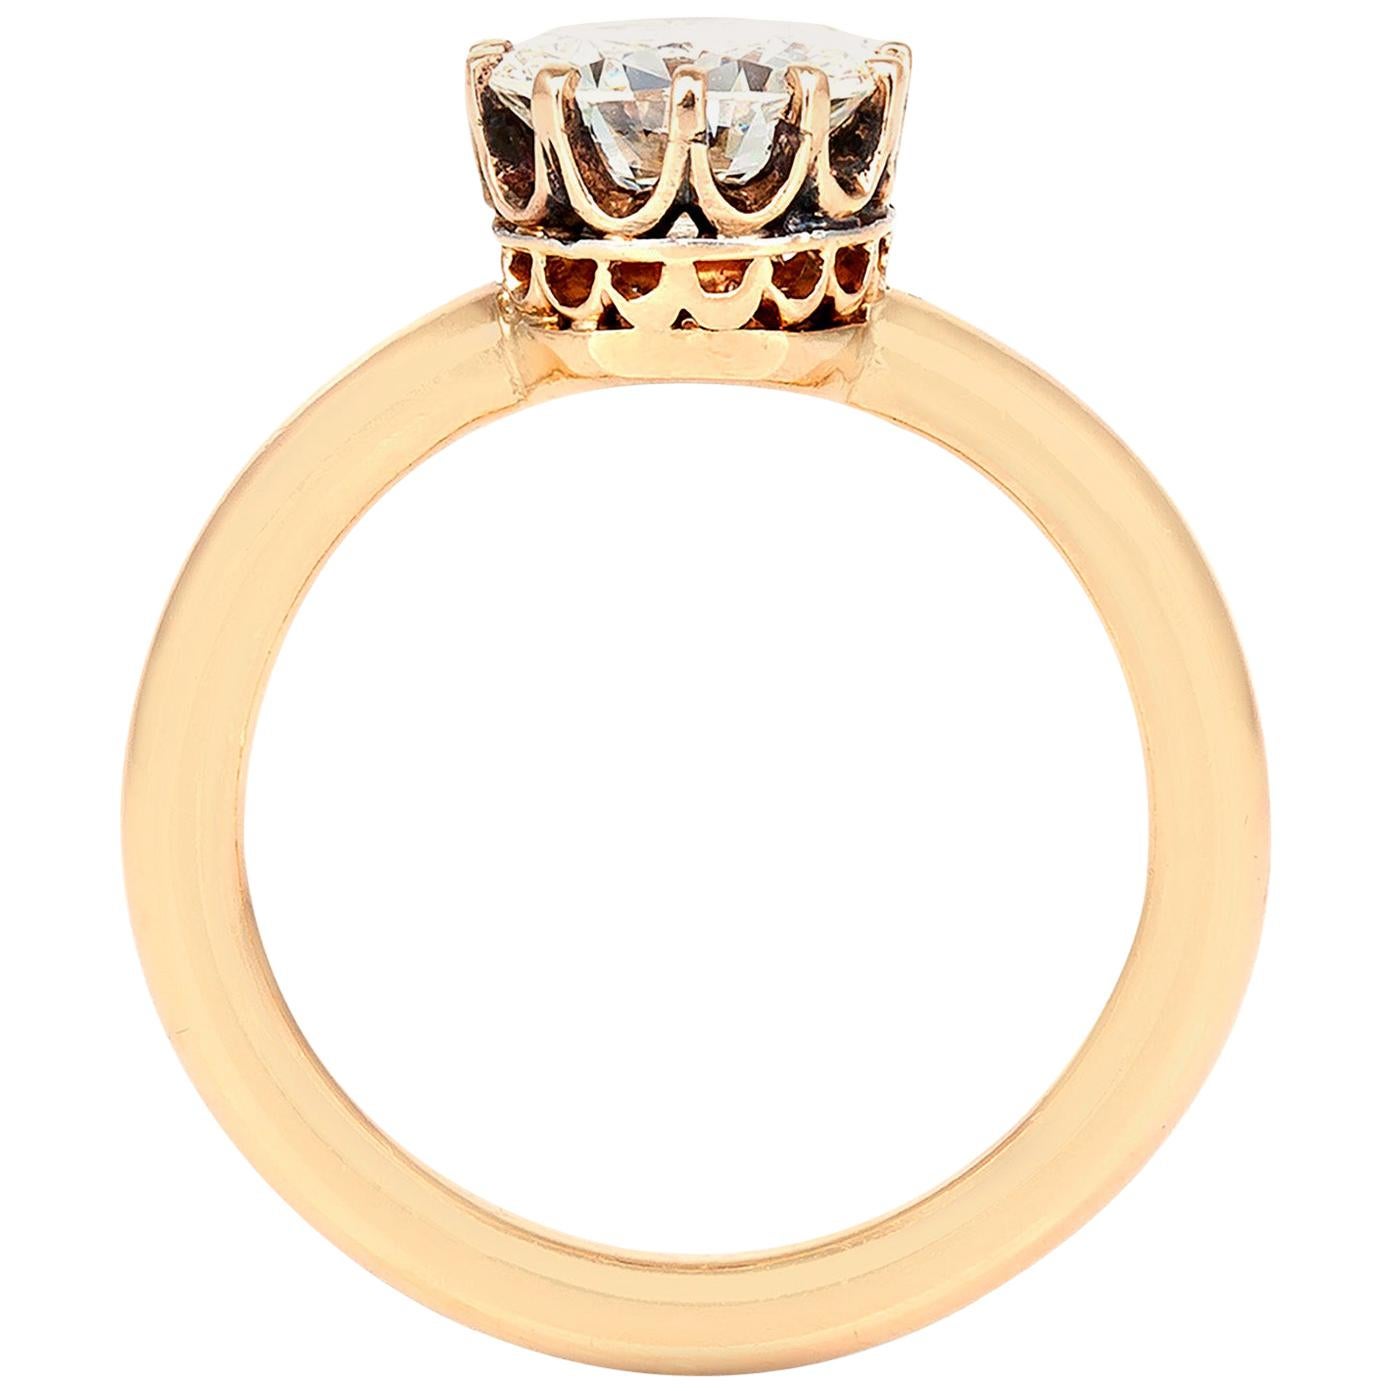 1.13 Carat Victorian Engagement Ring